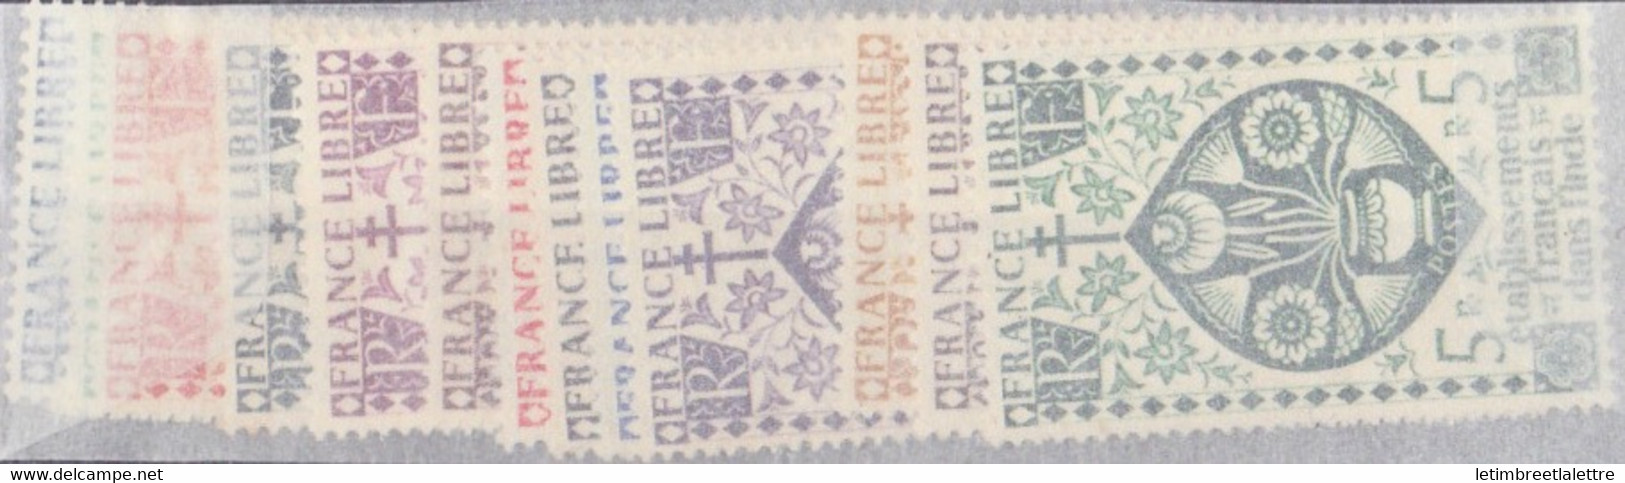 ⭐ Inde - YT N° 217 à 230 ** - Neuf Sans Charnière - 1942 ⭐ - Unused Stamps